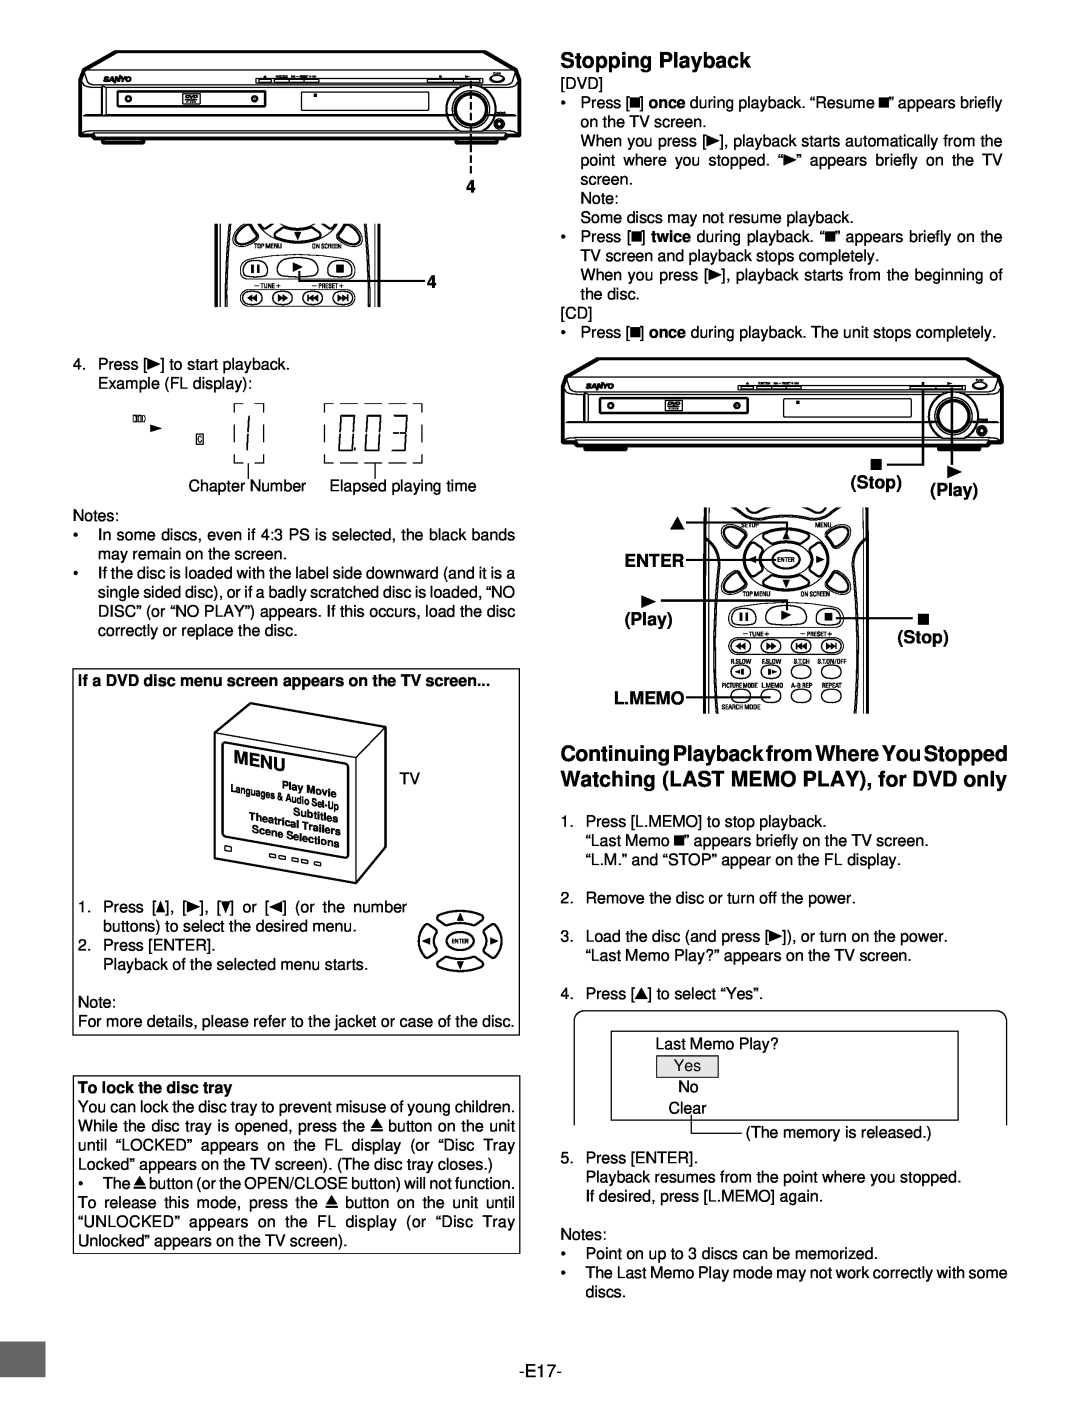 Sanyo DWM-2500 instruction manual Stopping Playback, Menu, To lock the disc tray 